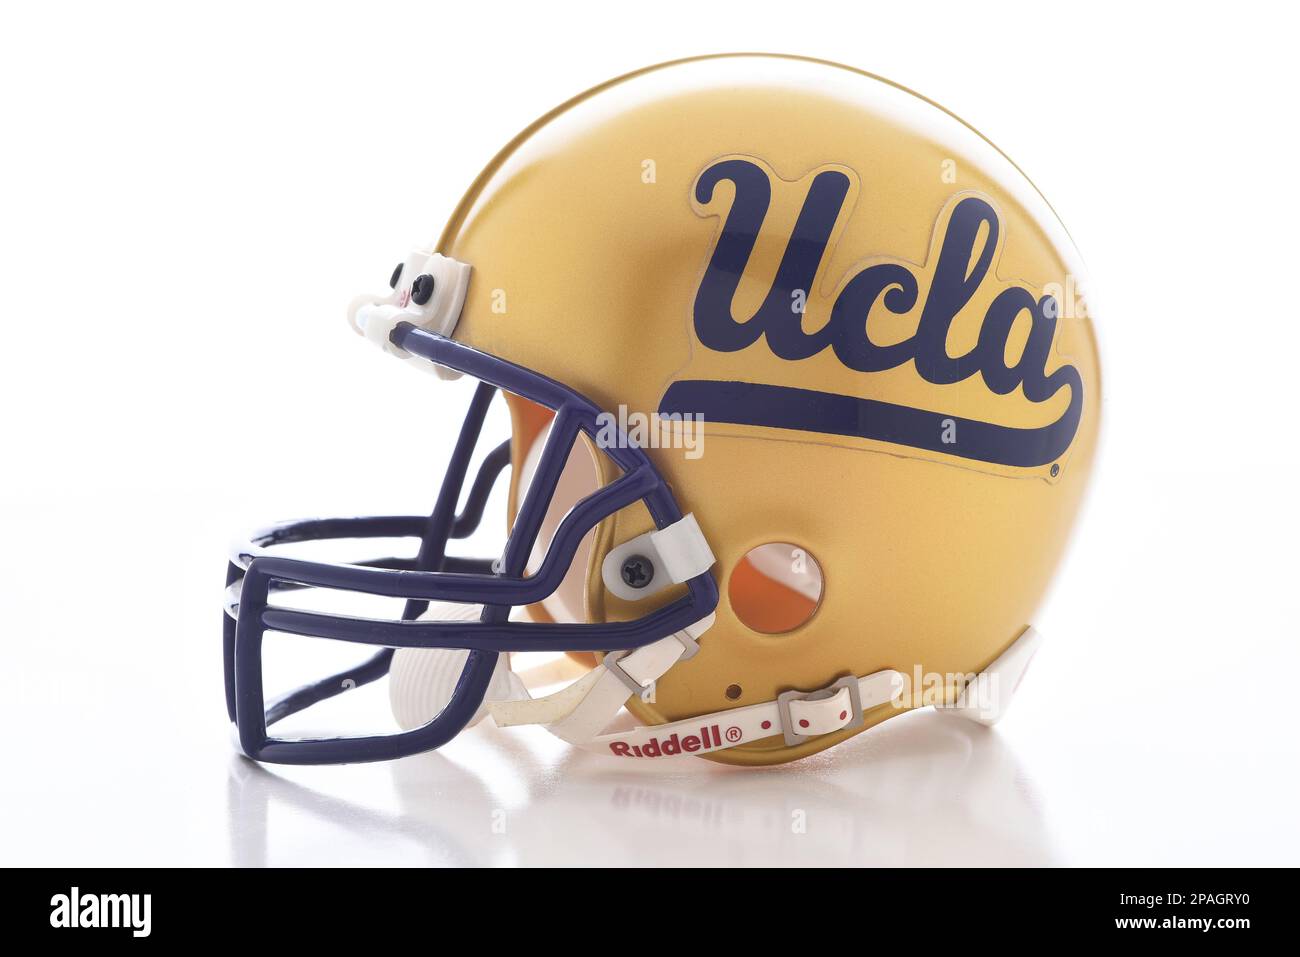 IRVINE, CALIFORNIA - 11 MAR 2023: A mini collectable football helmet from the University of California Los Angeles, UCLA. Stock Photo